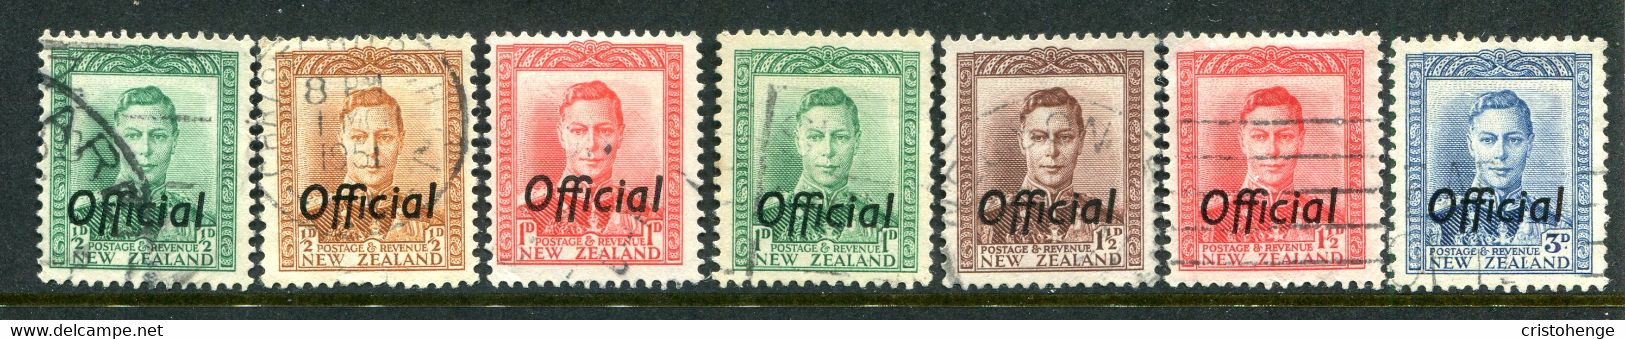 New Zealand 1938-51 Officials - KGVI - Set Used (SG O134-O140) - Officials